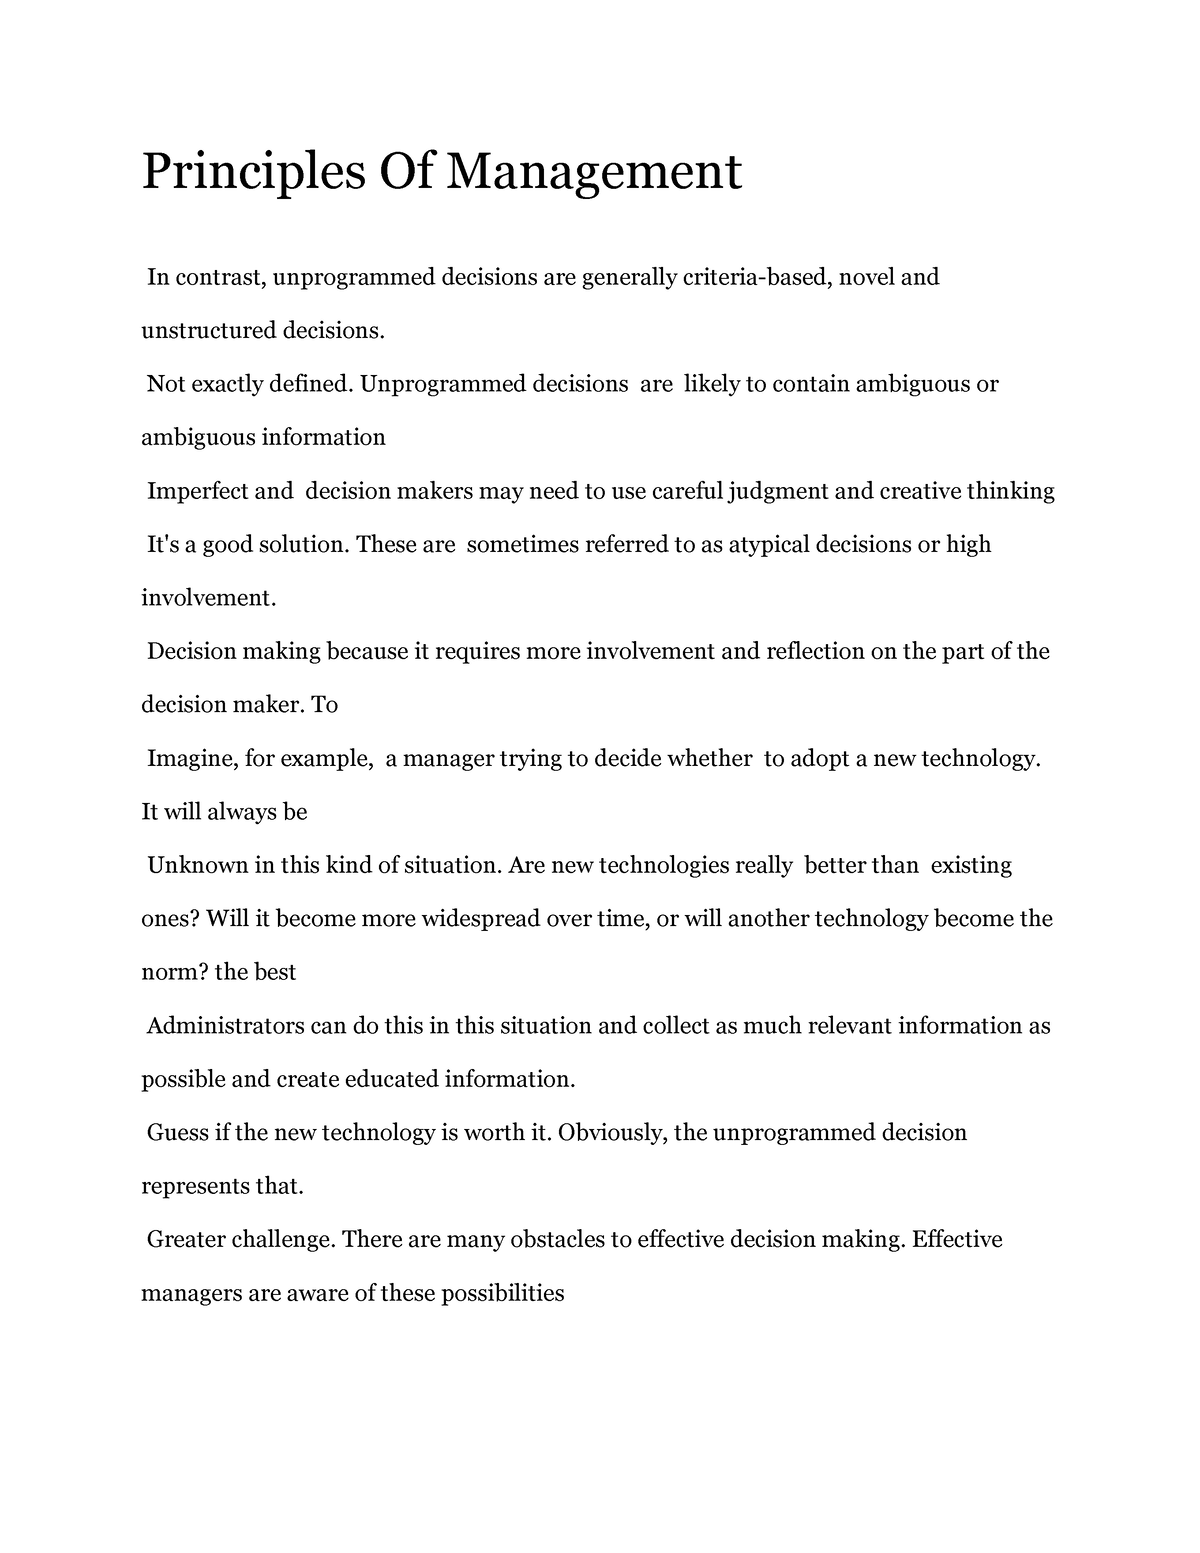 principles-of-management-1-3-principles-of-management-in-contrast